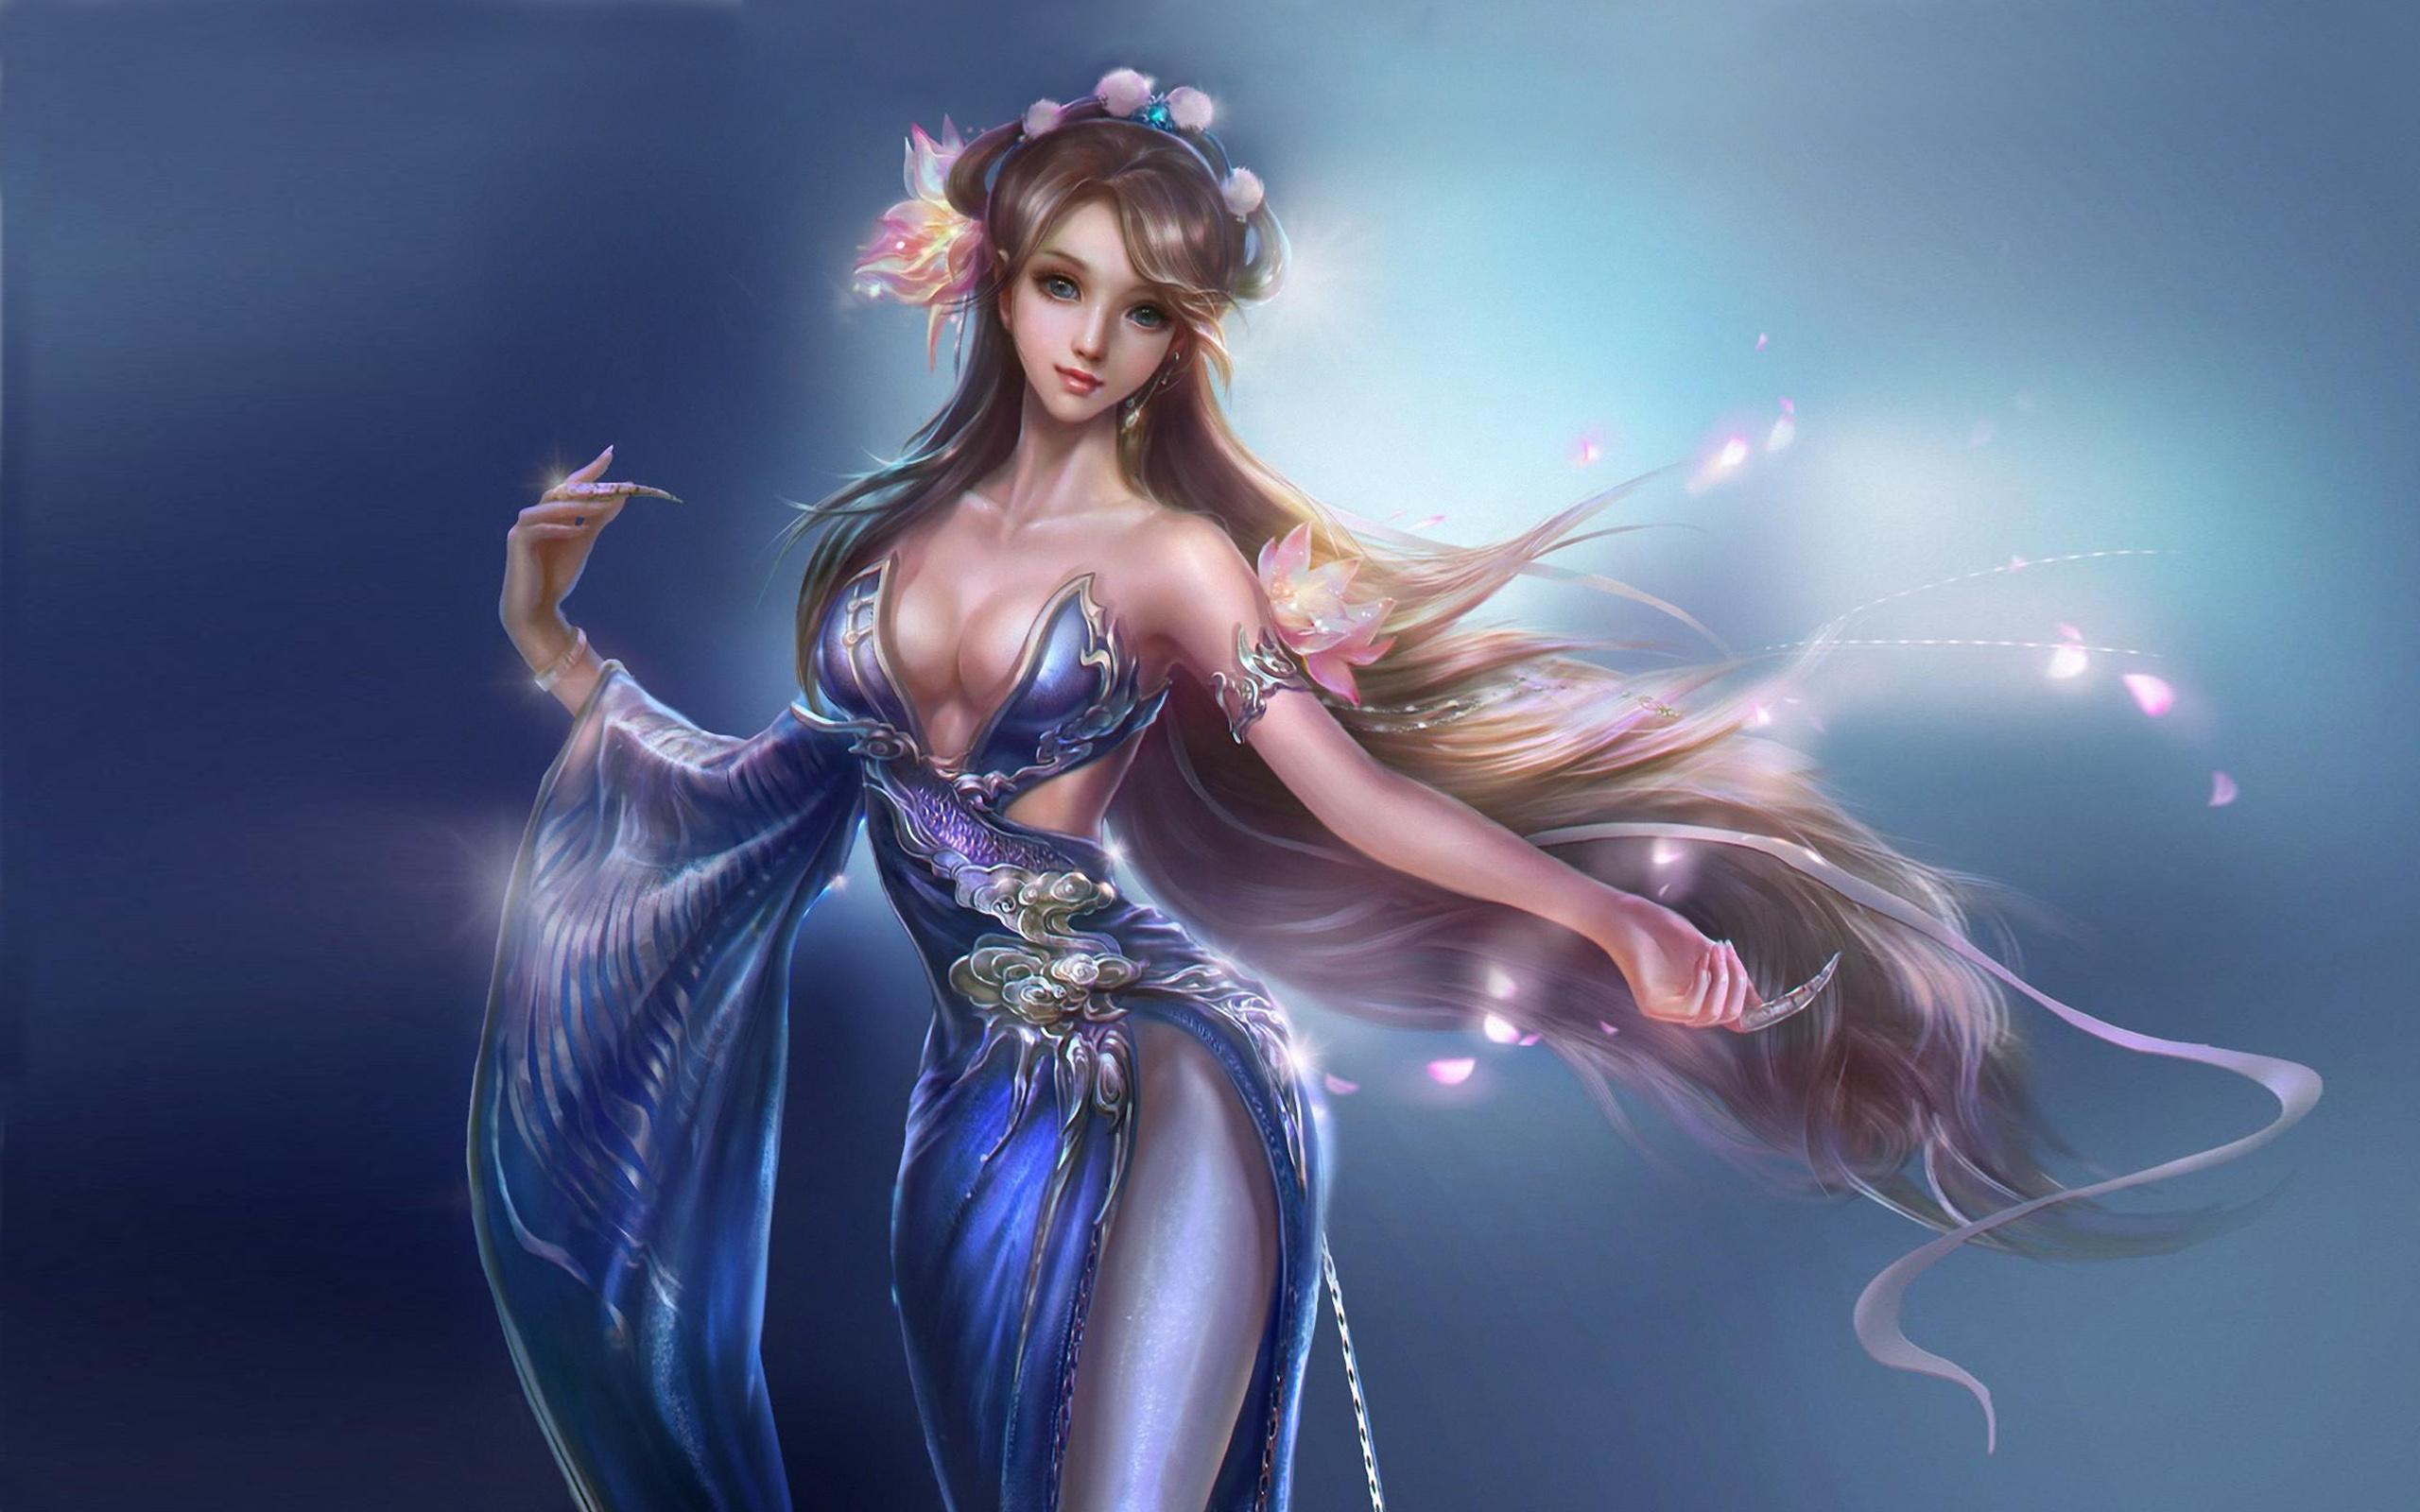 Beautiful Classical Oriental Girl Fantasy Art Wallpaper, Wallpaper13.com